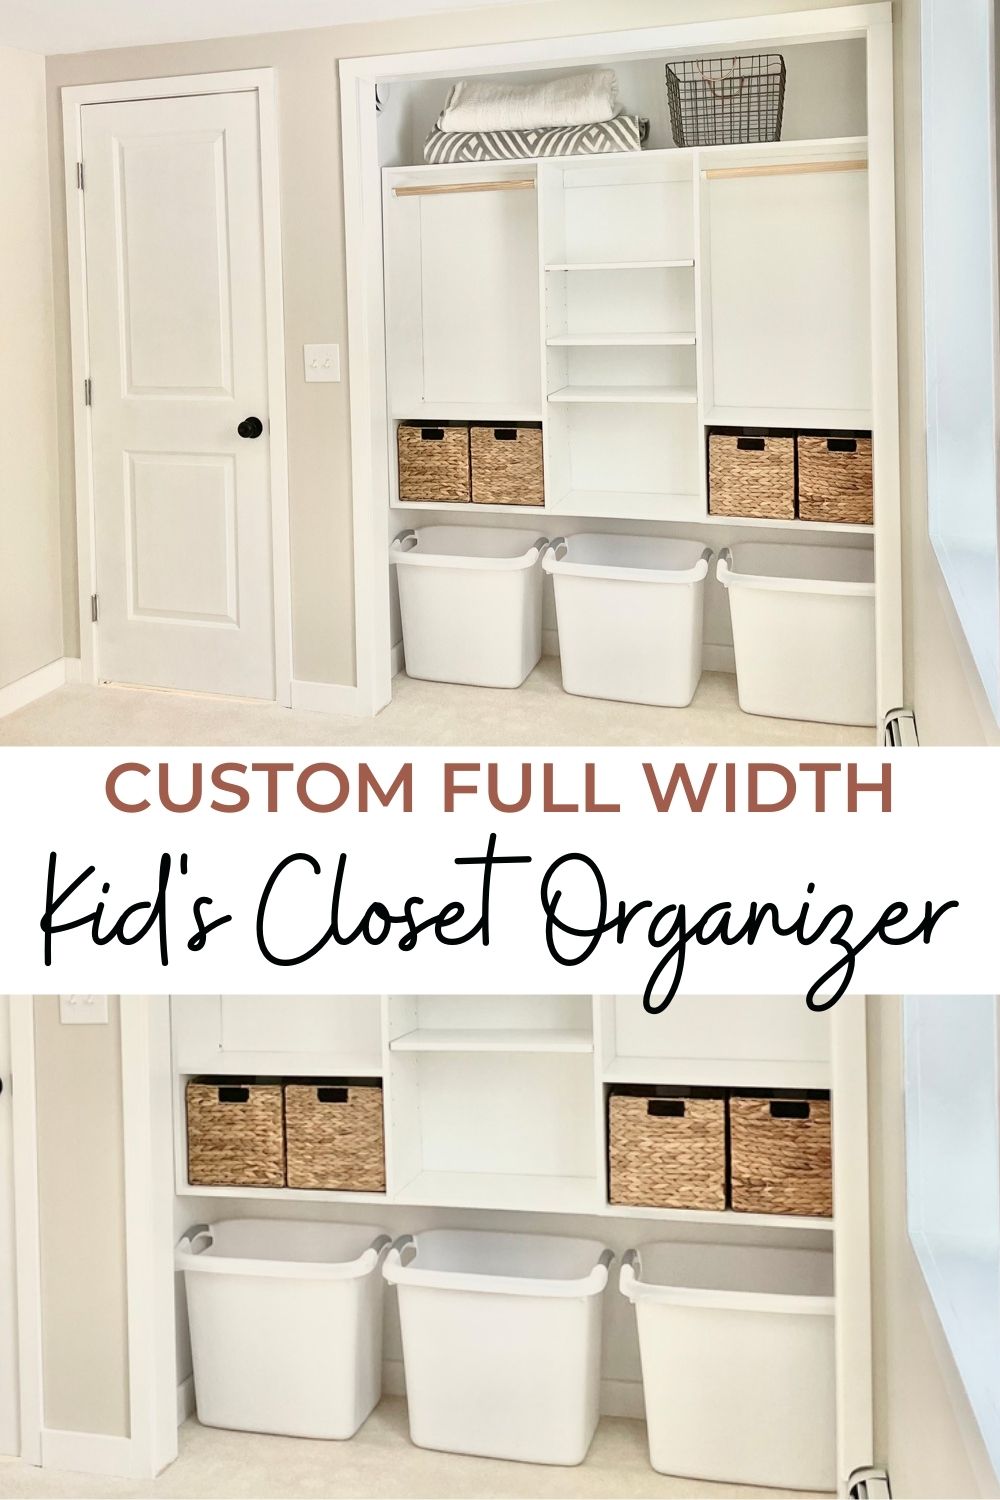 Custom Full Width Kid's Closet Organizer